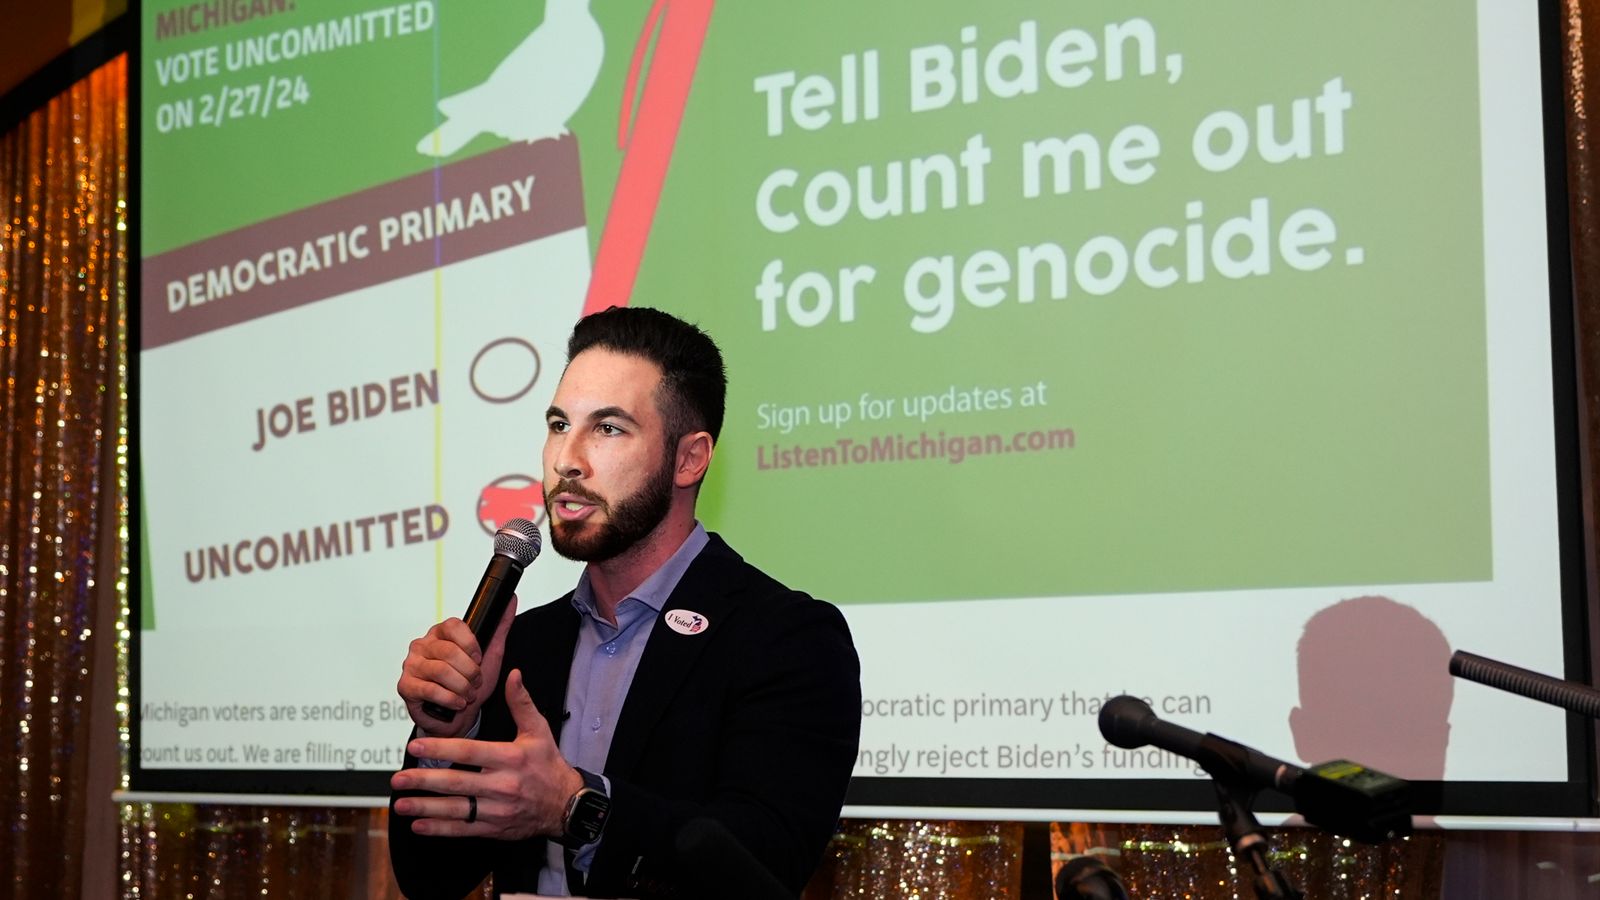 joe biden wins michigan primary but faces voter backlash